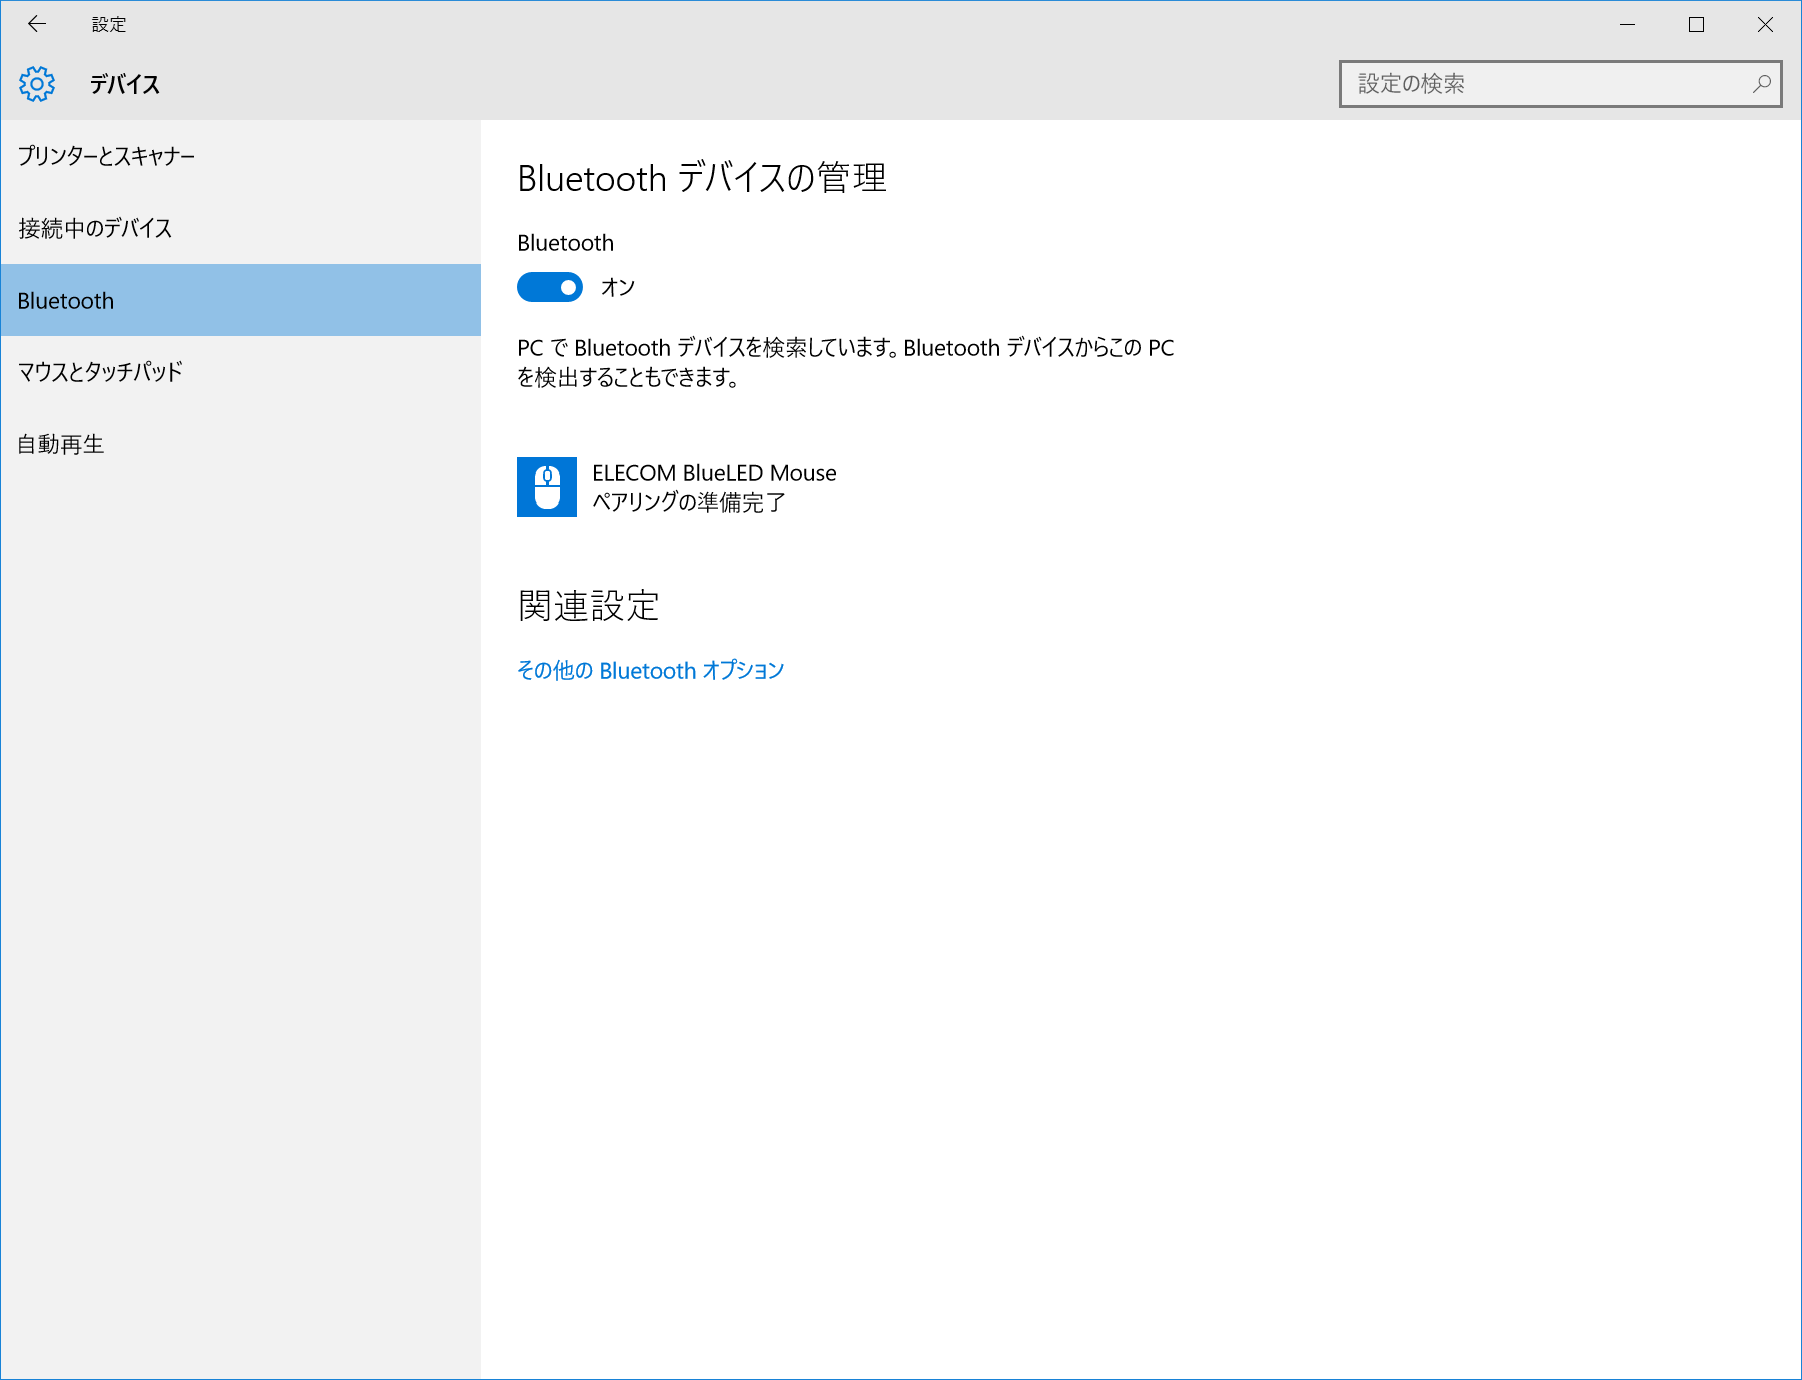 bluetooth usb host controller driver windows 10 mac